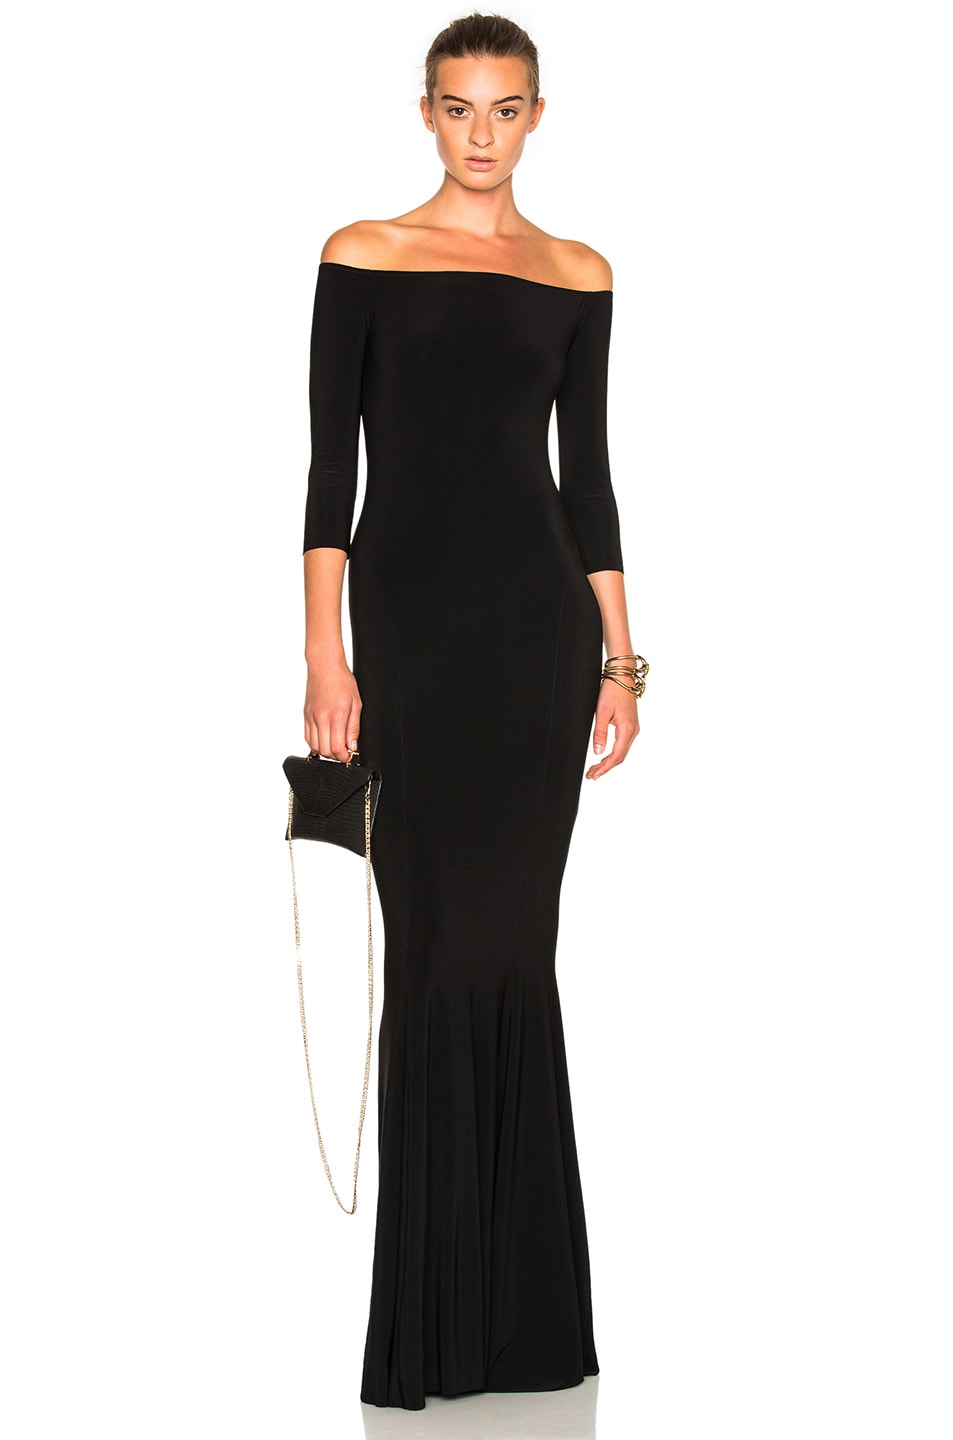 Norma Kamali Off Shoulder Fishtail Dress in Black | FWRD